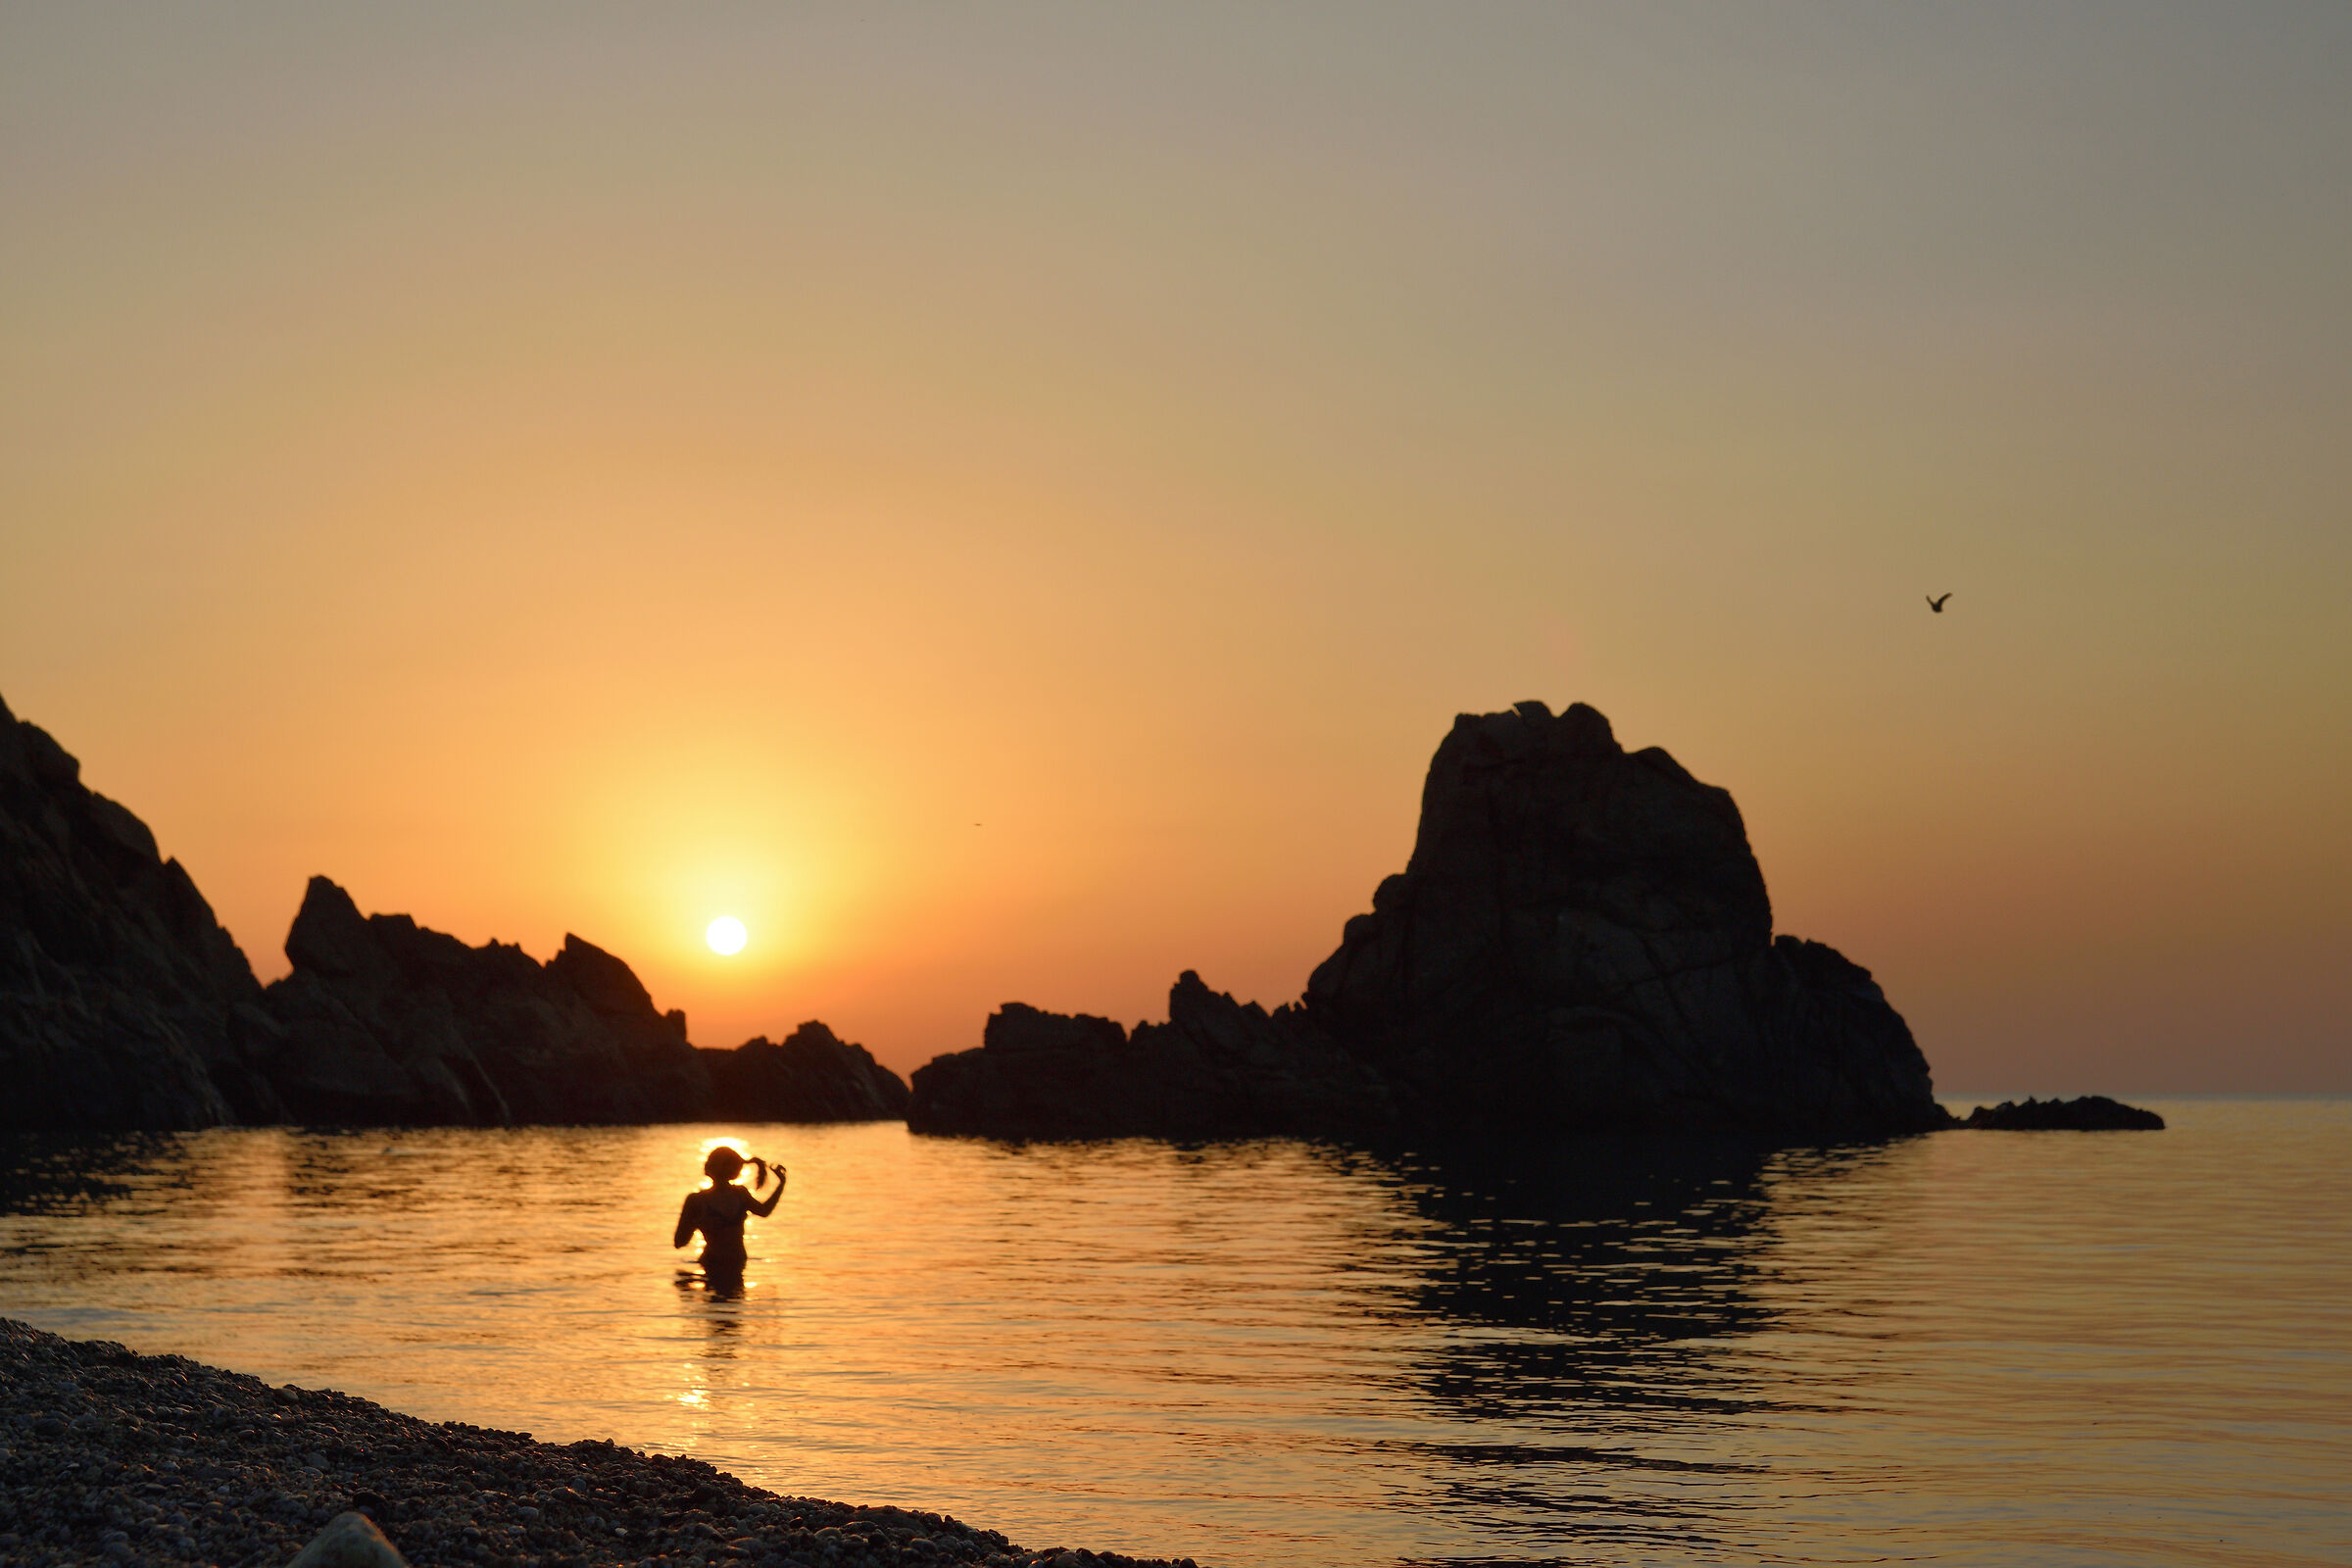 An Dawn on the Ionian Sea...